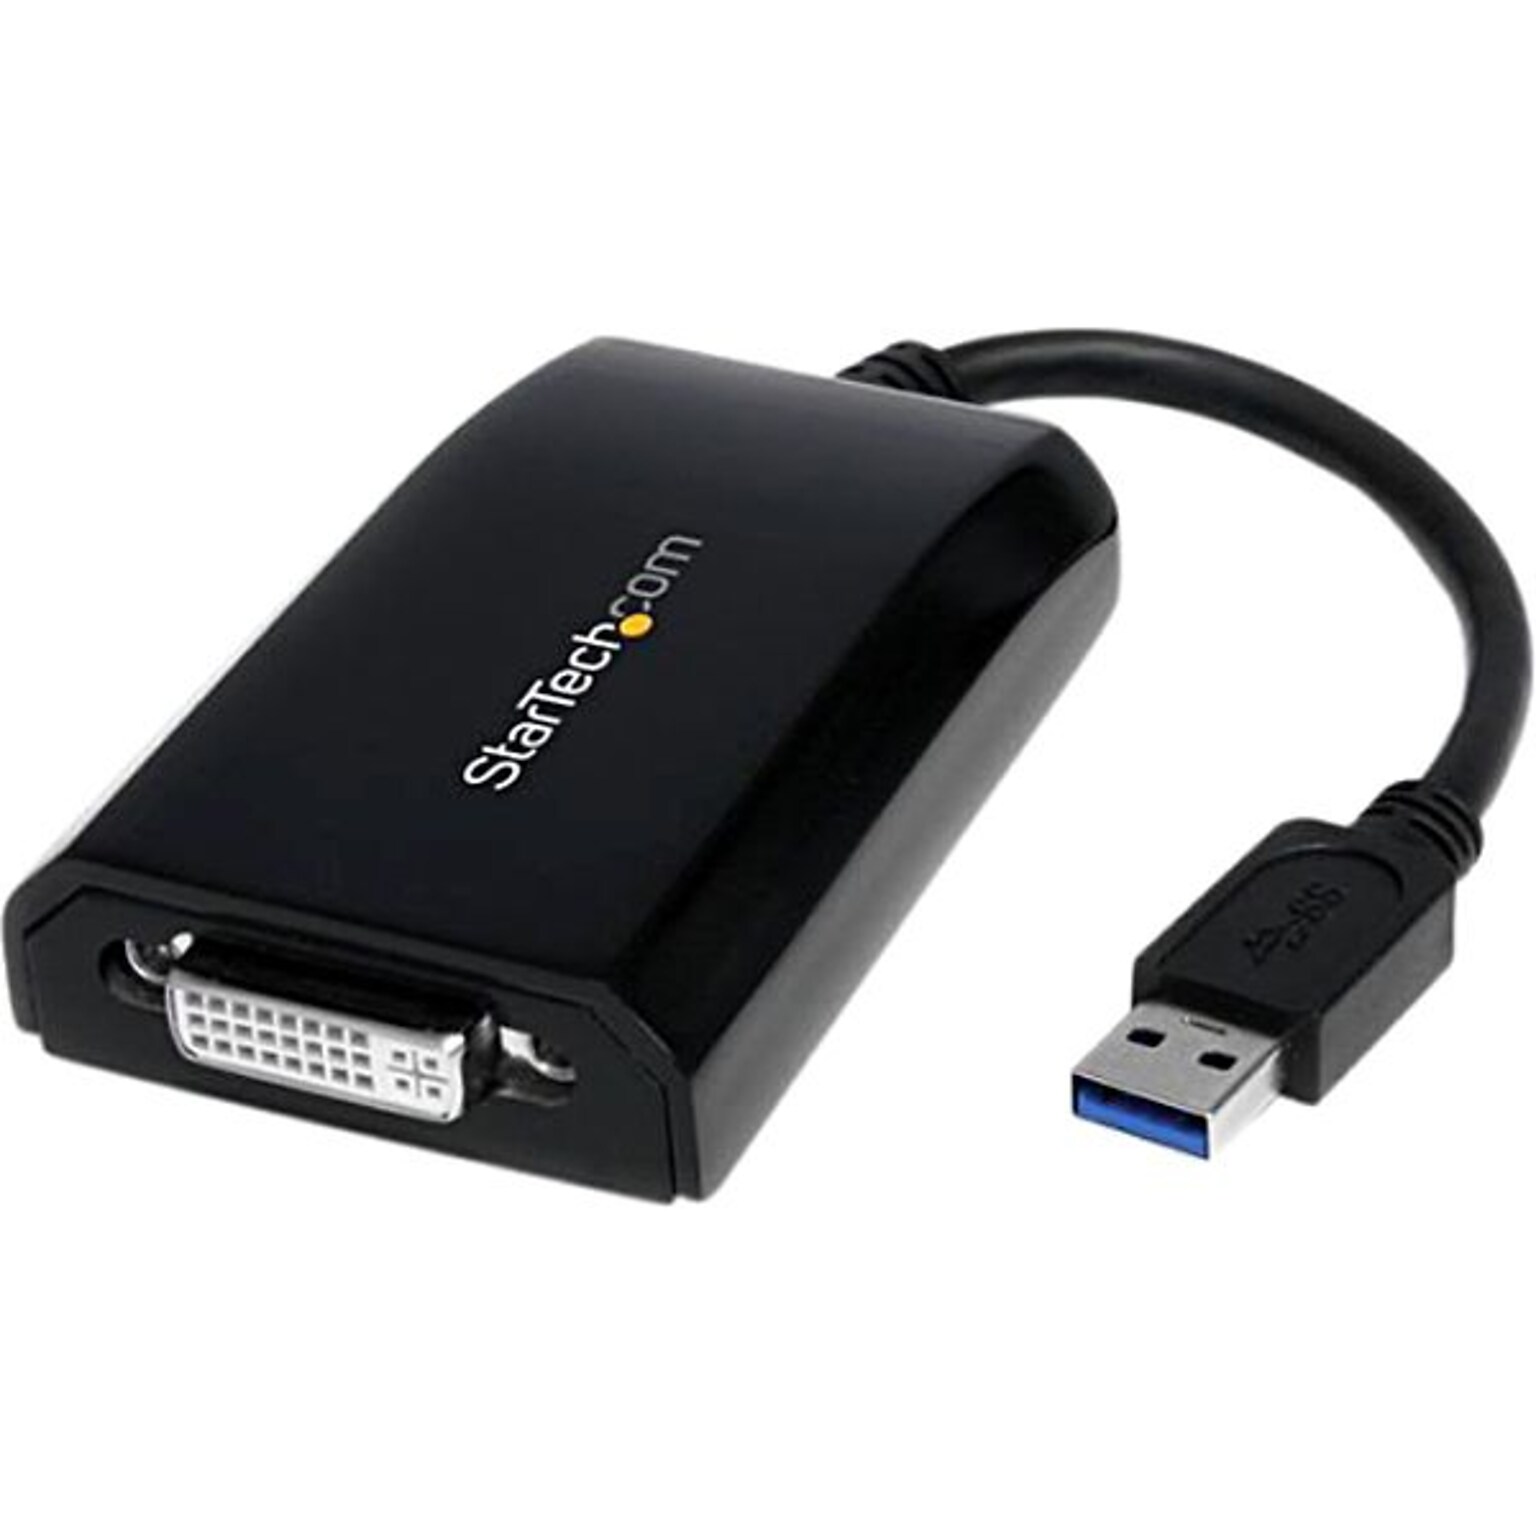 Startech USB 3.0 to DVI External Video Card Multi Monitor Adapter; Black